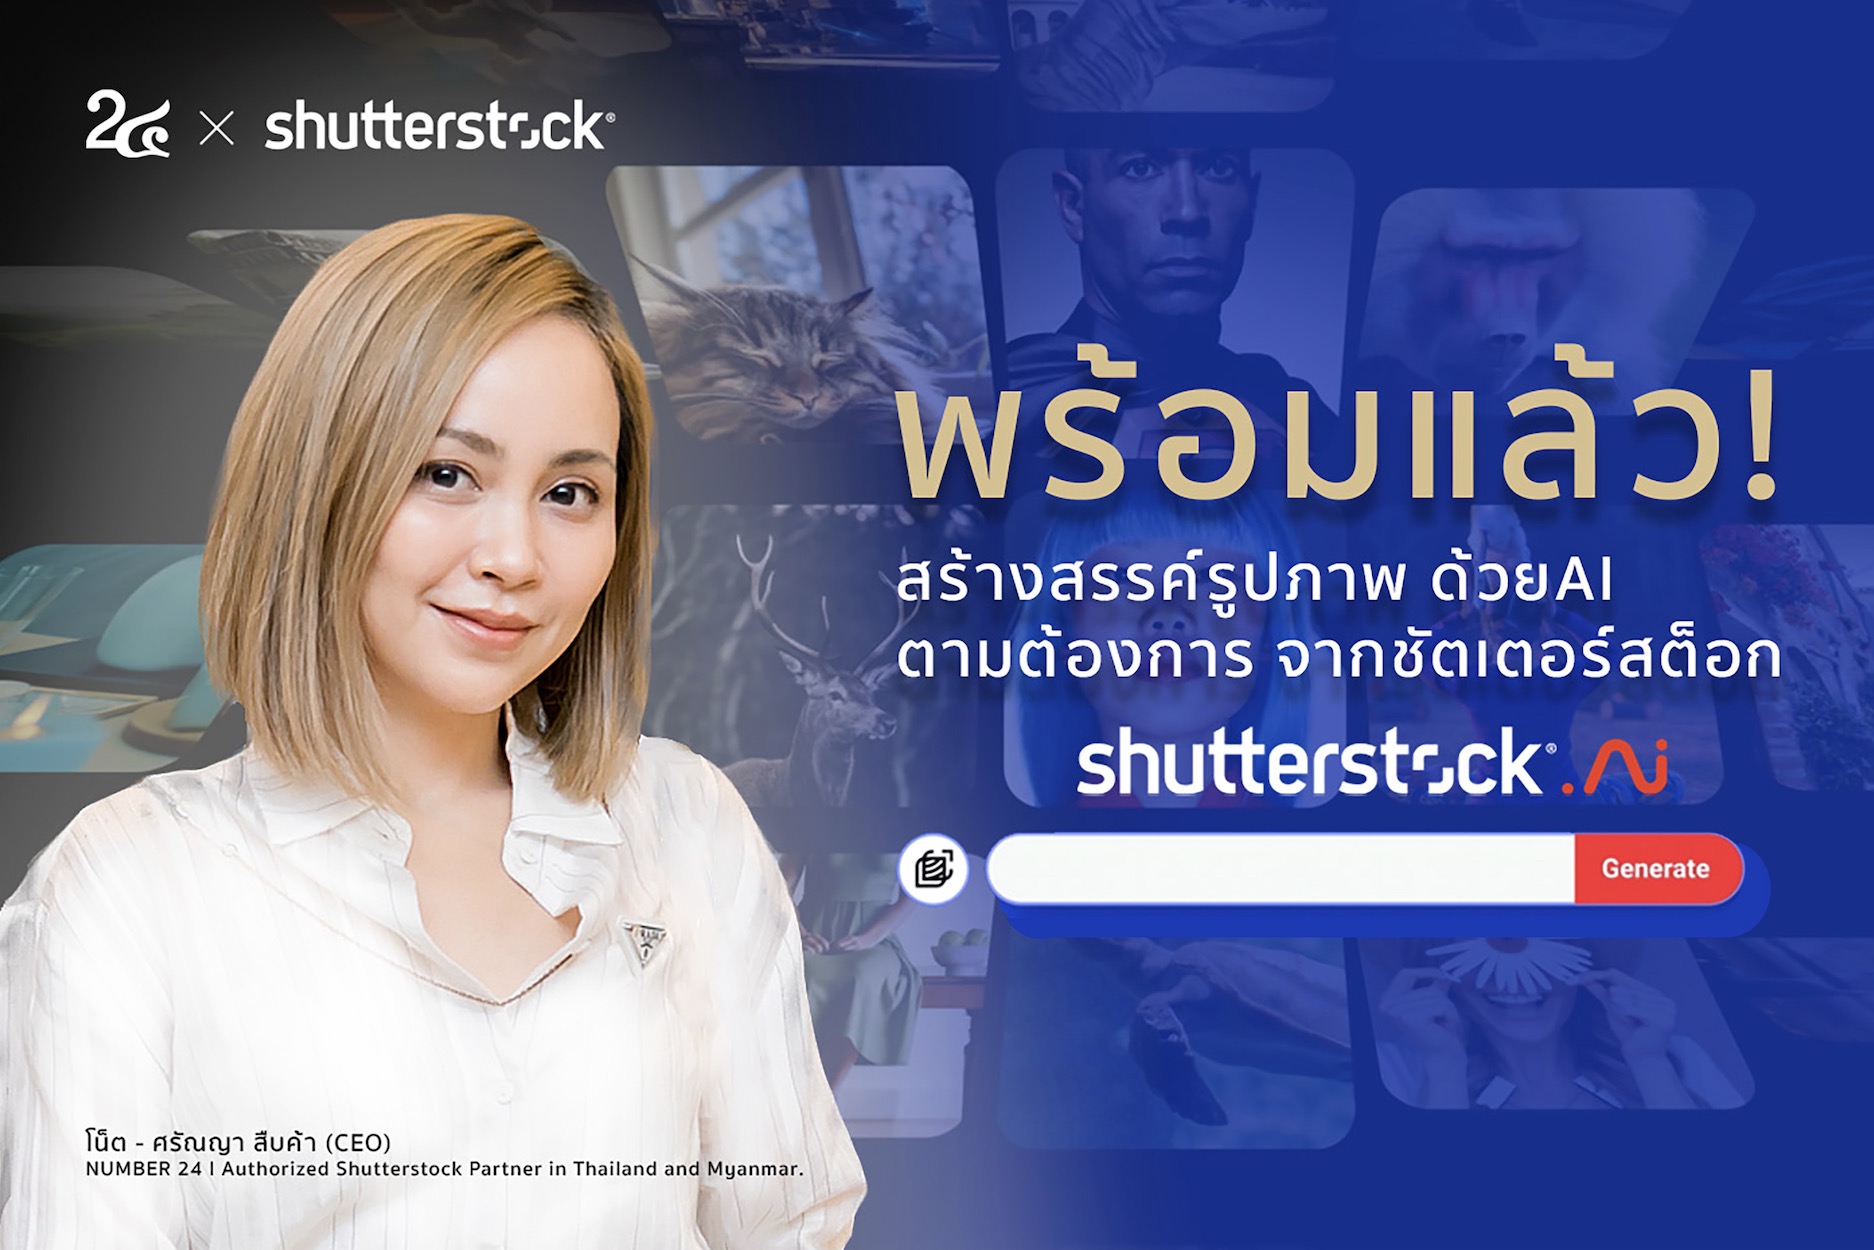 Number 24 x Shutterstock กับการทำงานที่ Co-Working Space ร่วมกับ